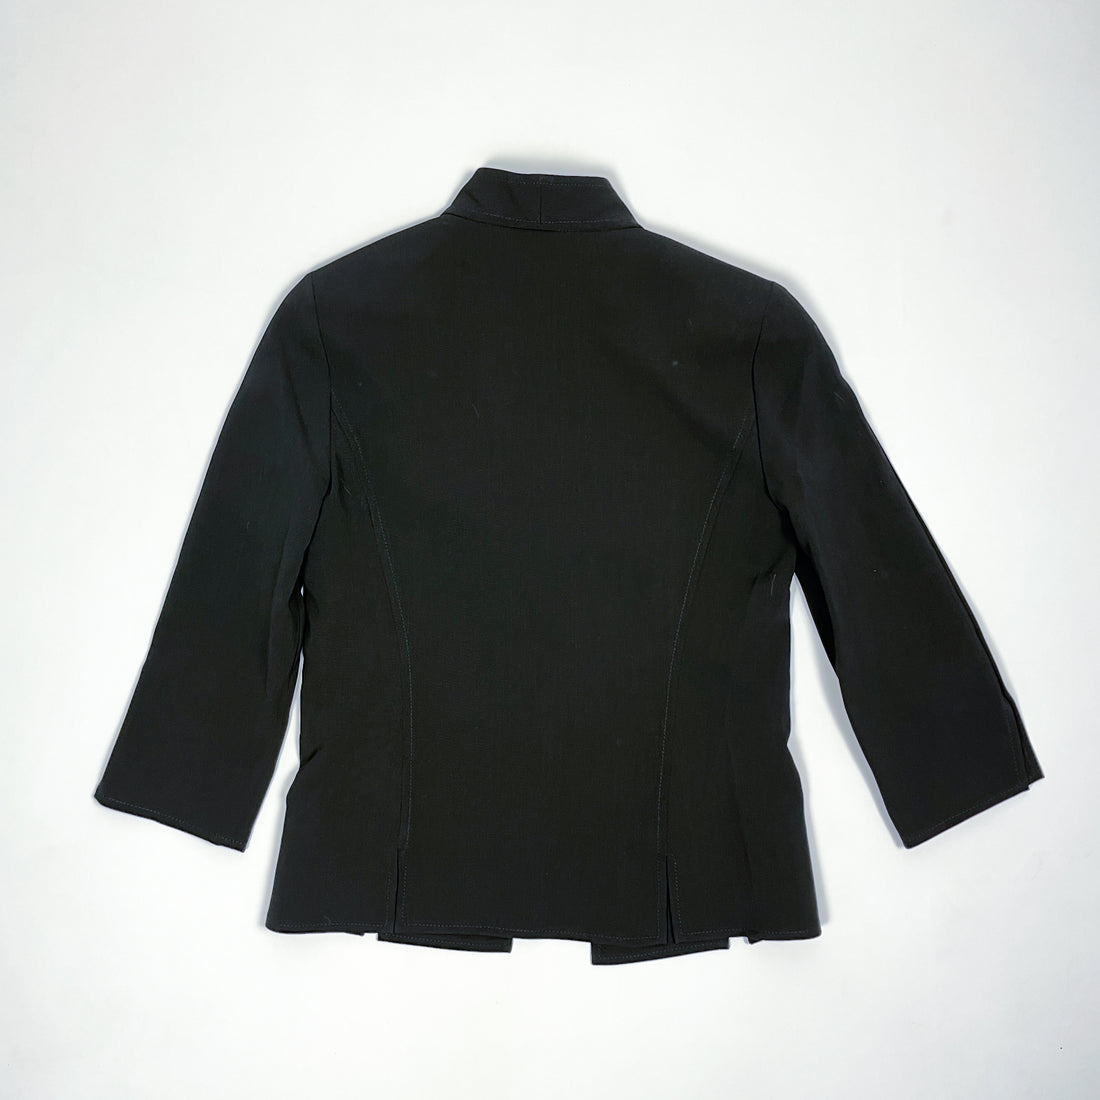 Thierry Mugler Uniforme Black Cut Jacket 1990's